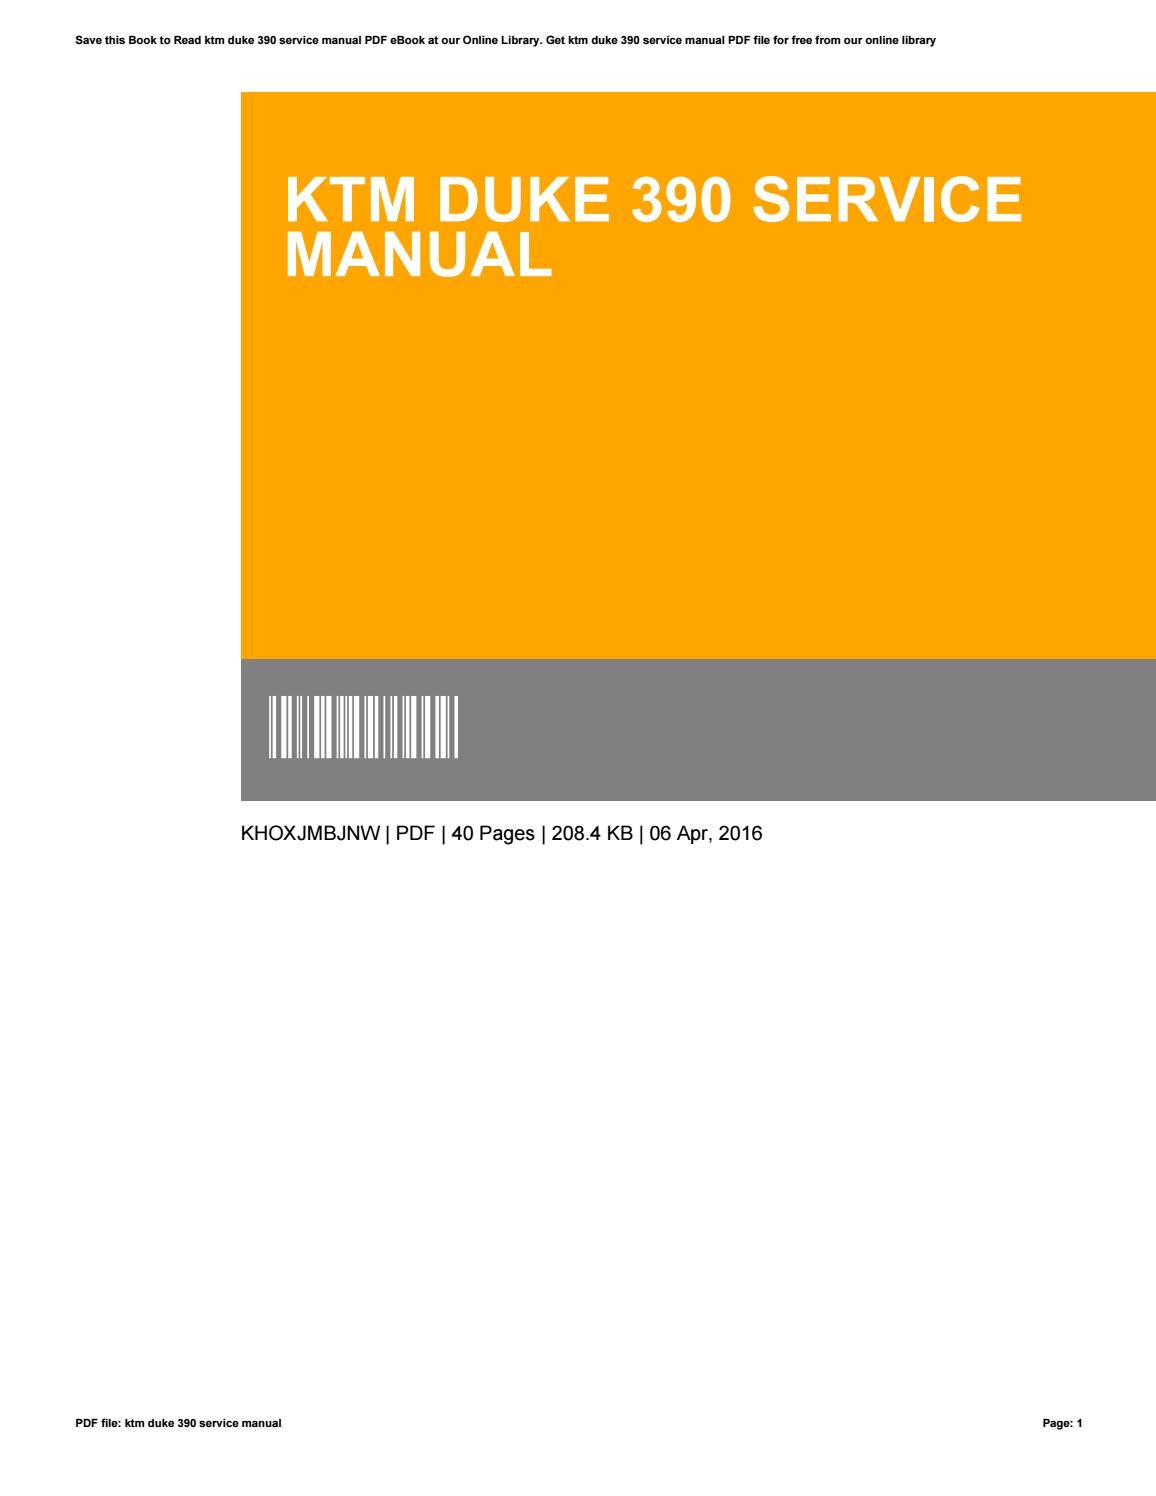 ktm rc 390 service manual pdf